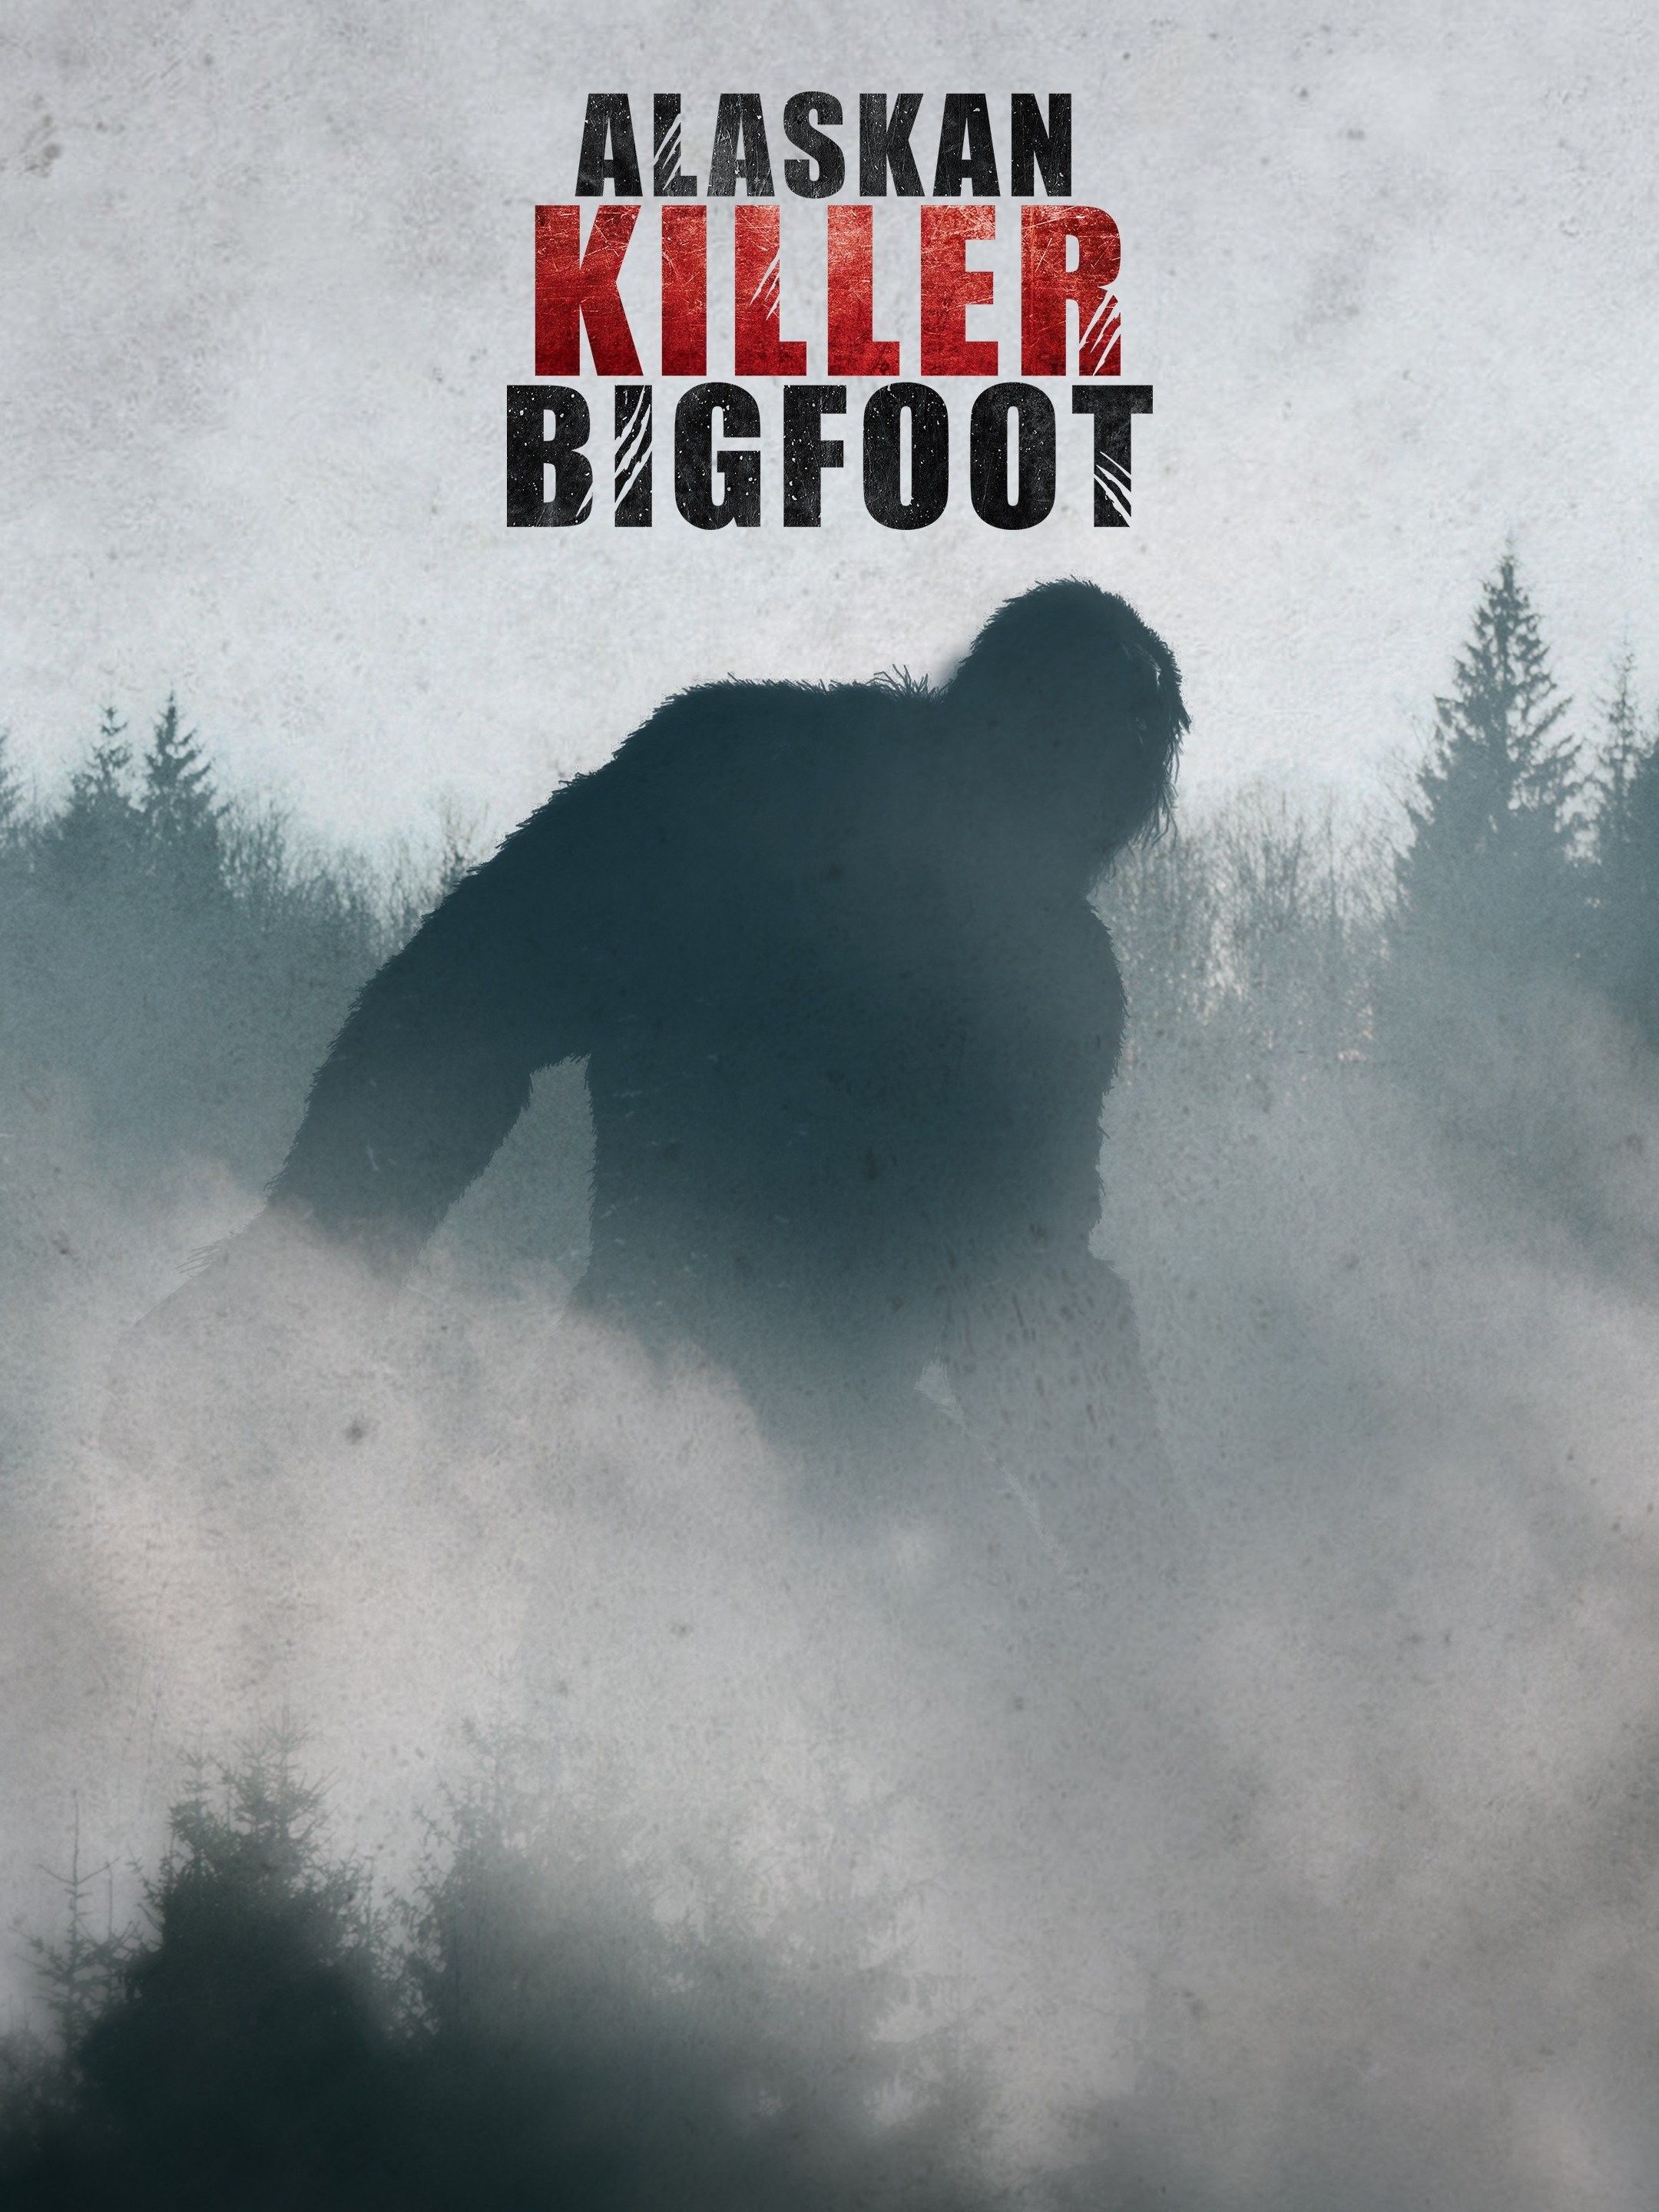 Alaska killer bigfoot fake